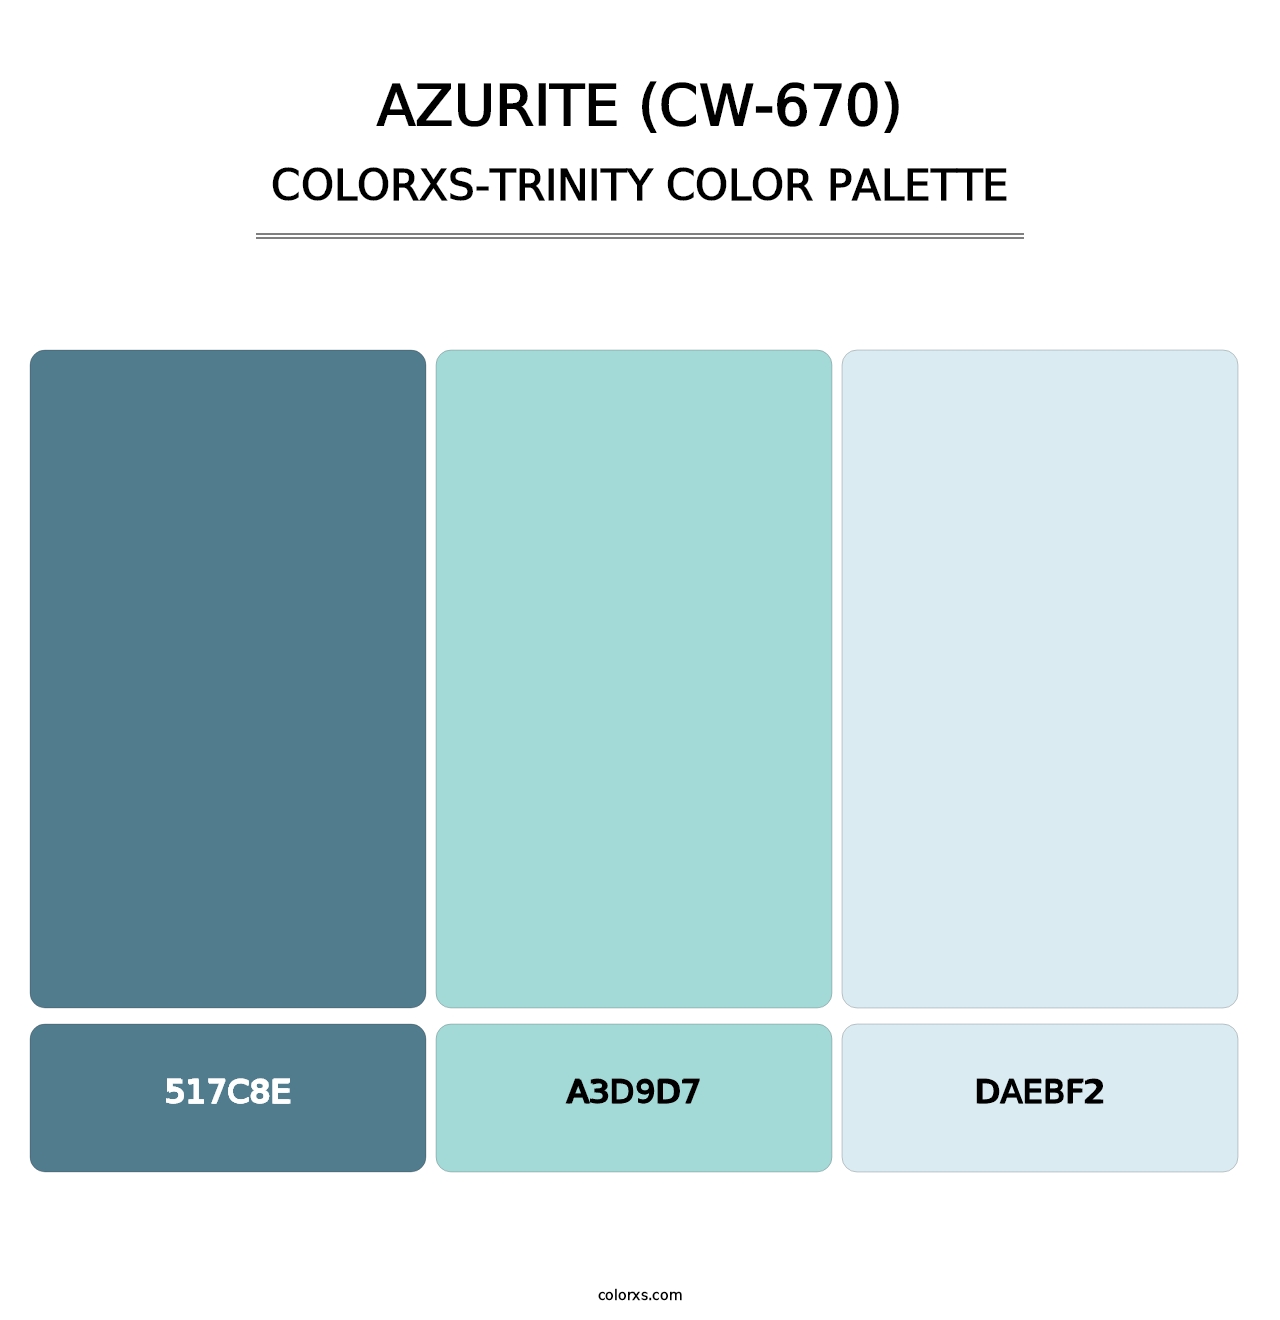 Azurite (CW-670) - Colorxs Trinity Palette